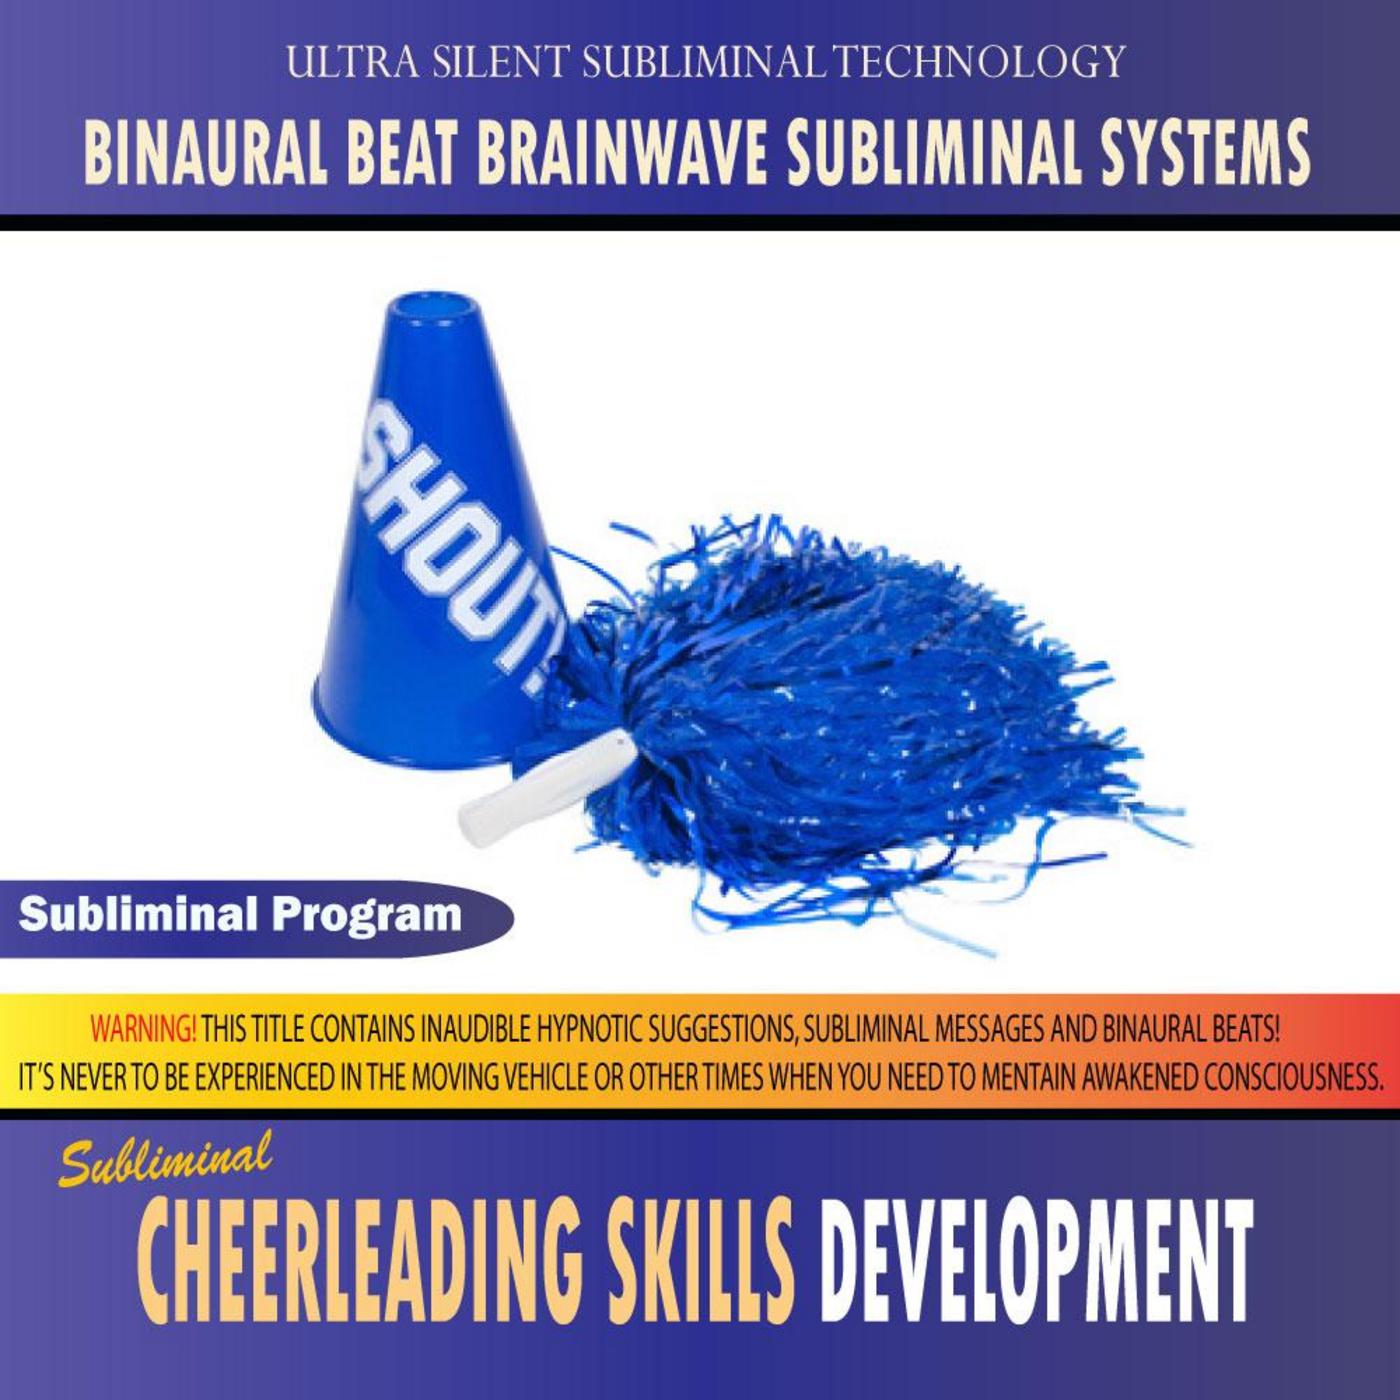 Cheerleading Skills Development - Binaural Beat Brainwave Subliminal Systems